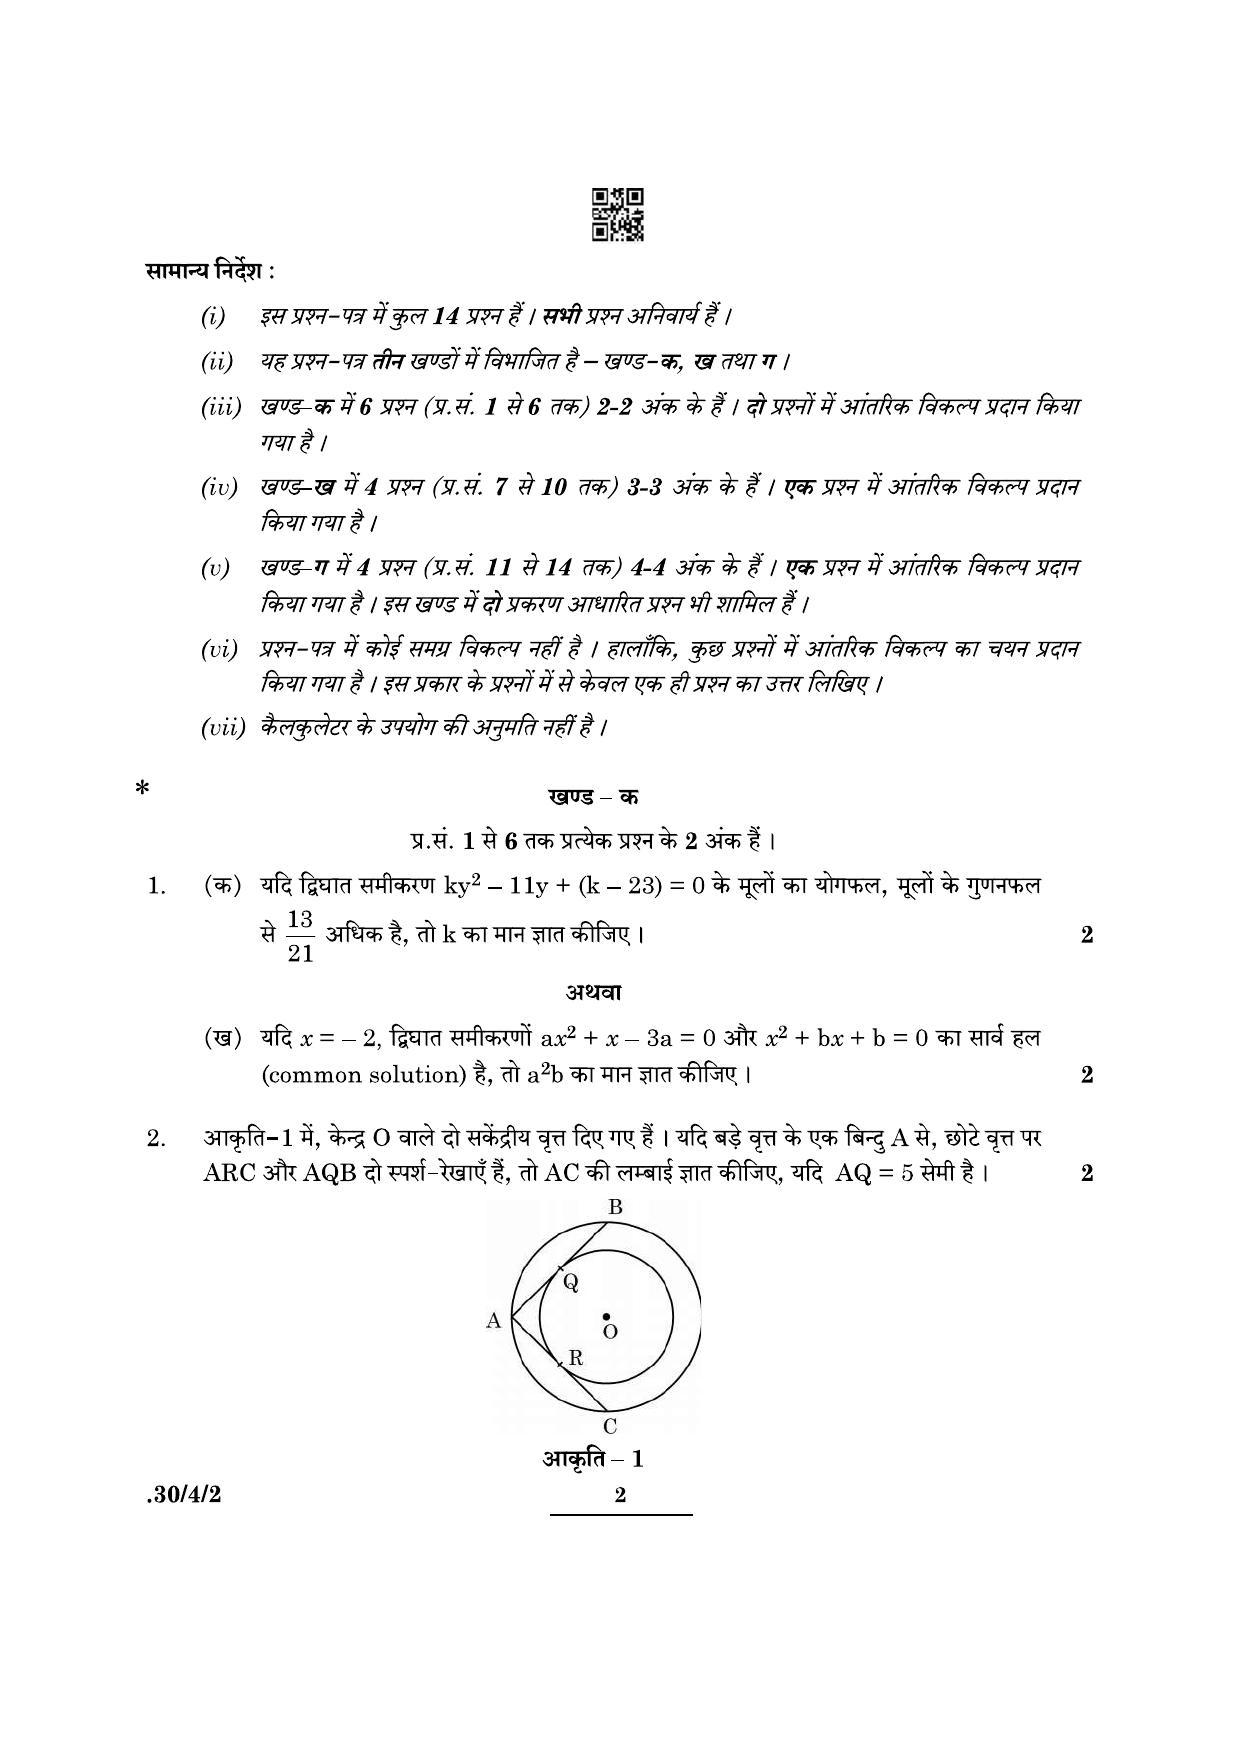 CBSE Class 10 Maths (30/4/2 - SET II) 2022 Question Paper - Page 2